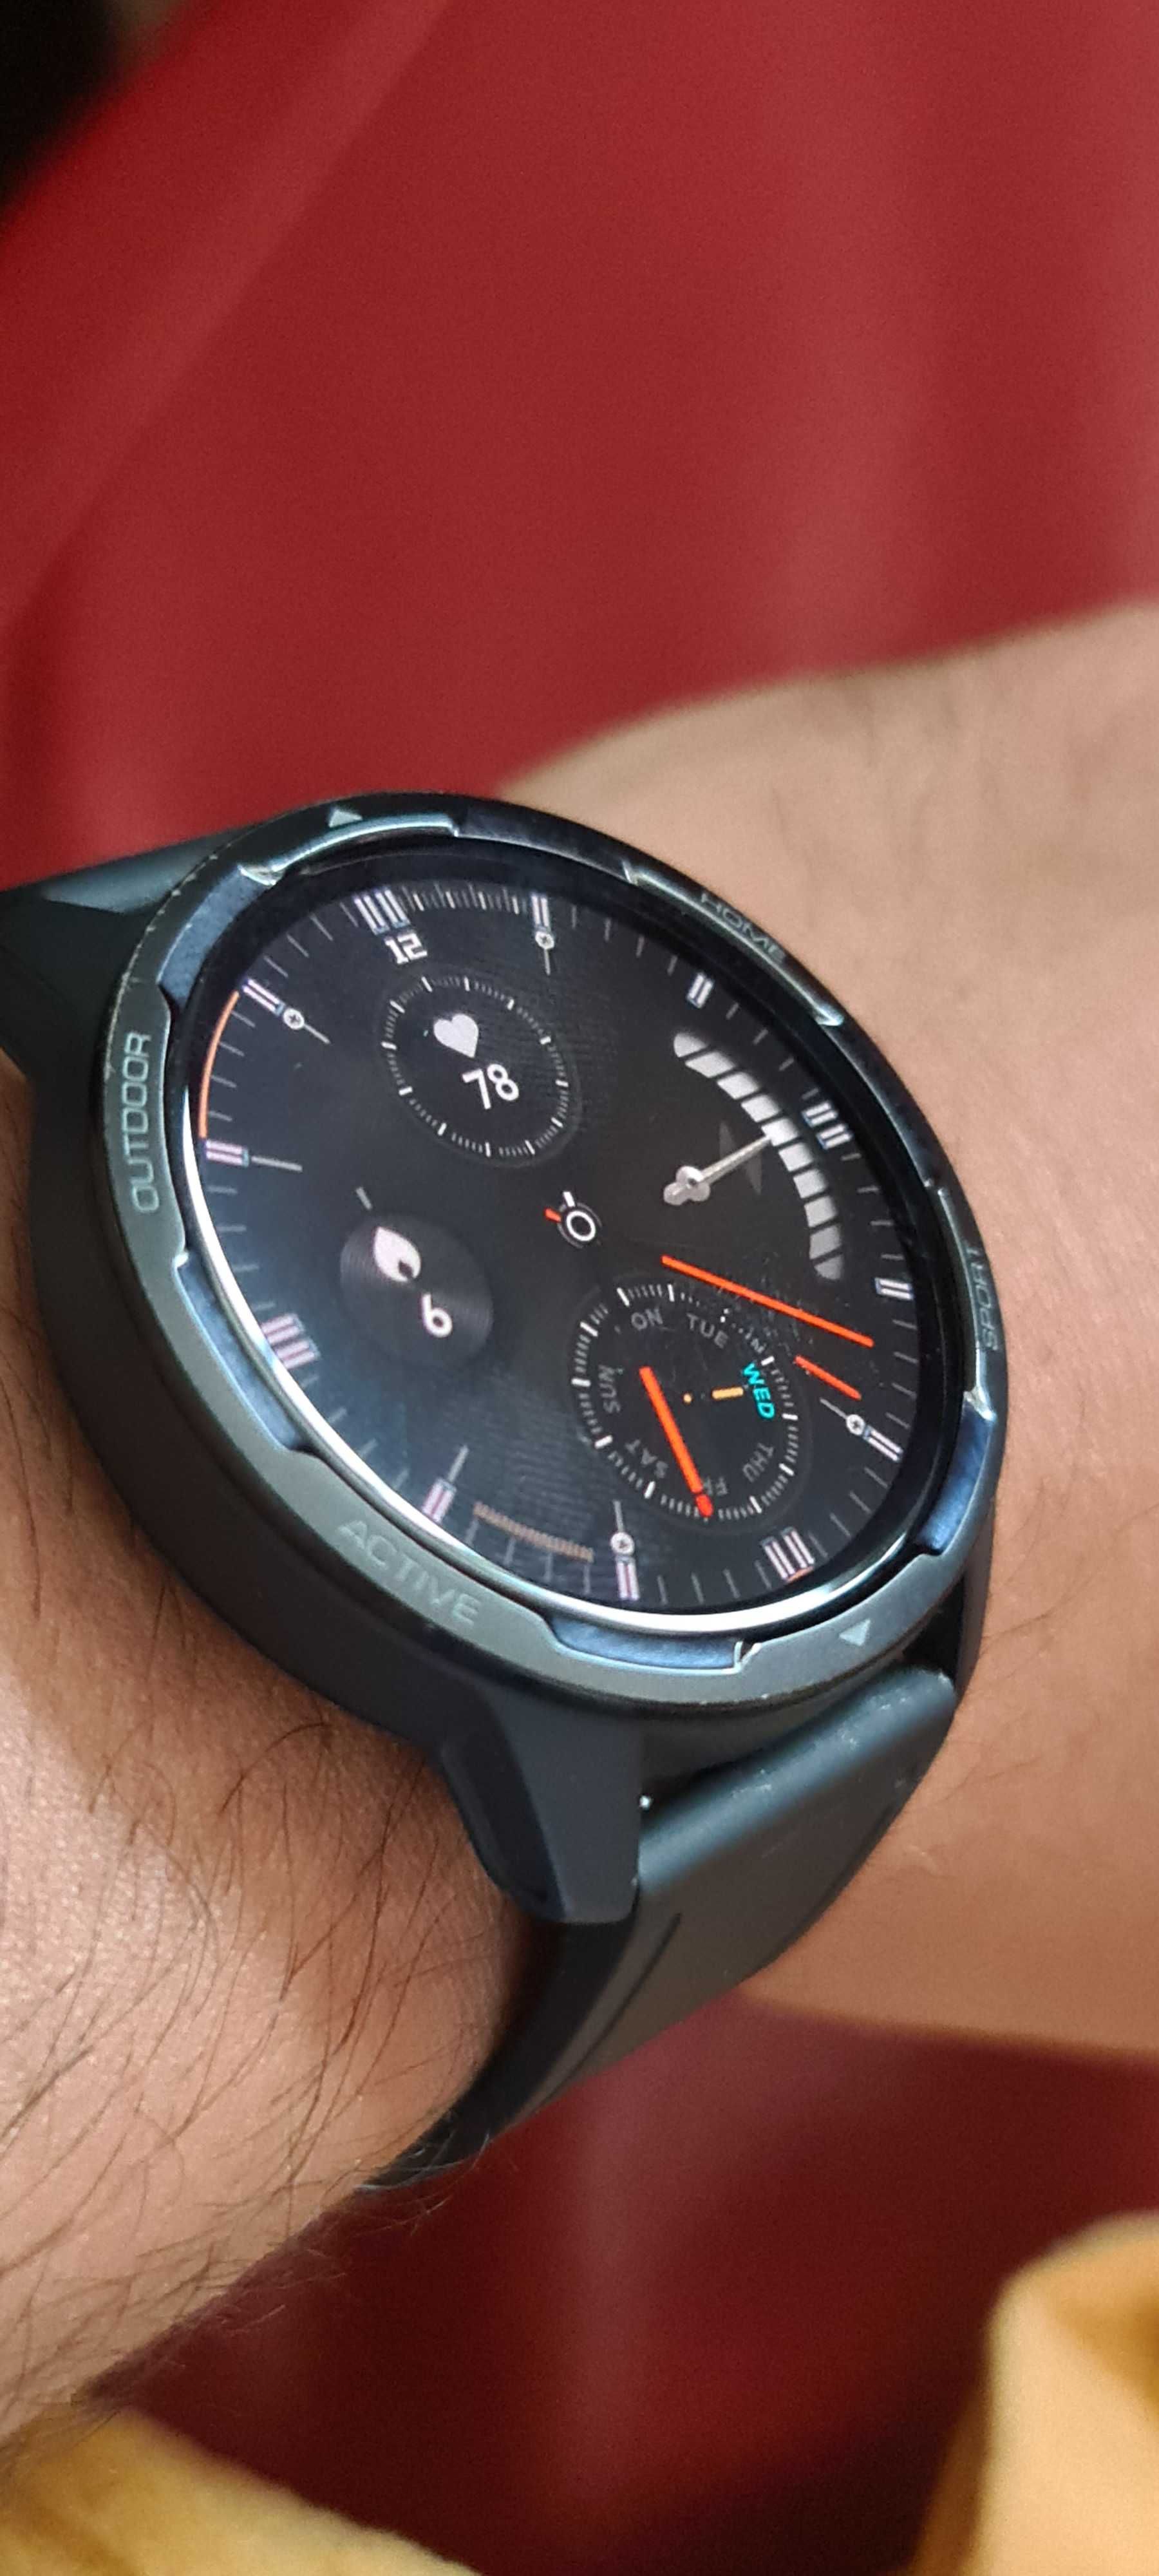 Smartwatch Xiaomi S1Active,garanție,Cadou,negru